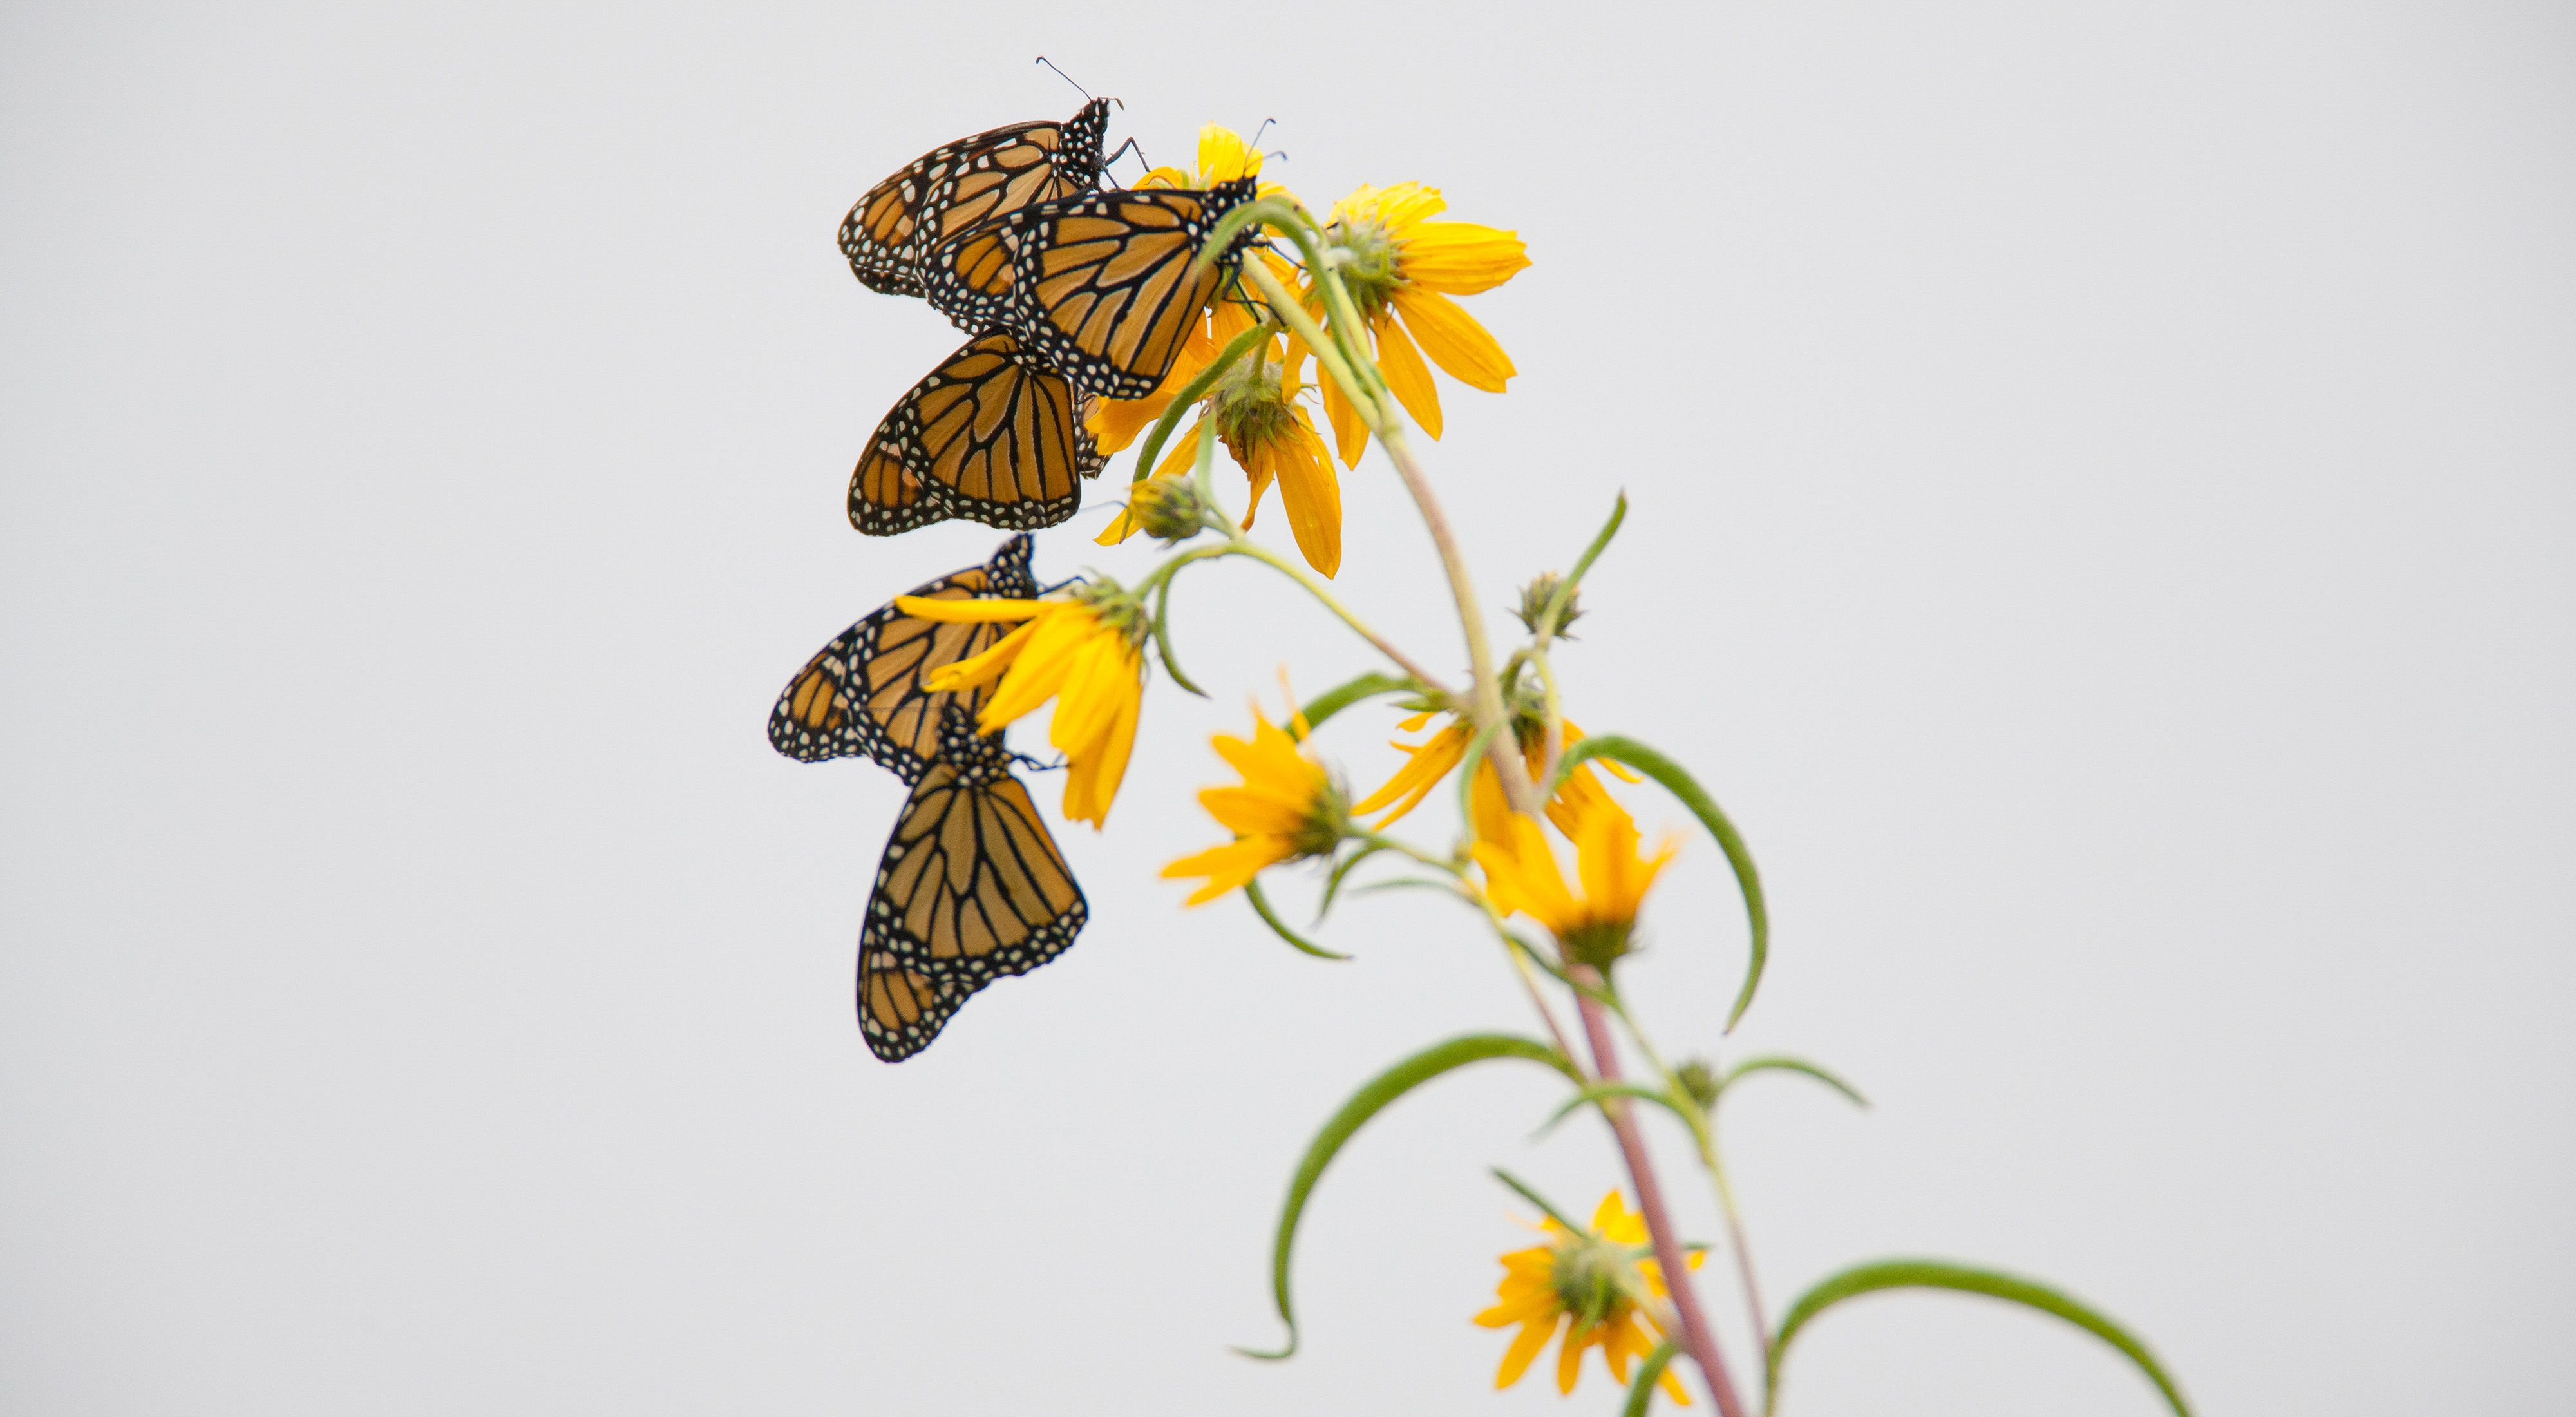 Monarch butterflies gather on yellow flowers.